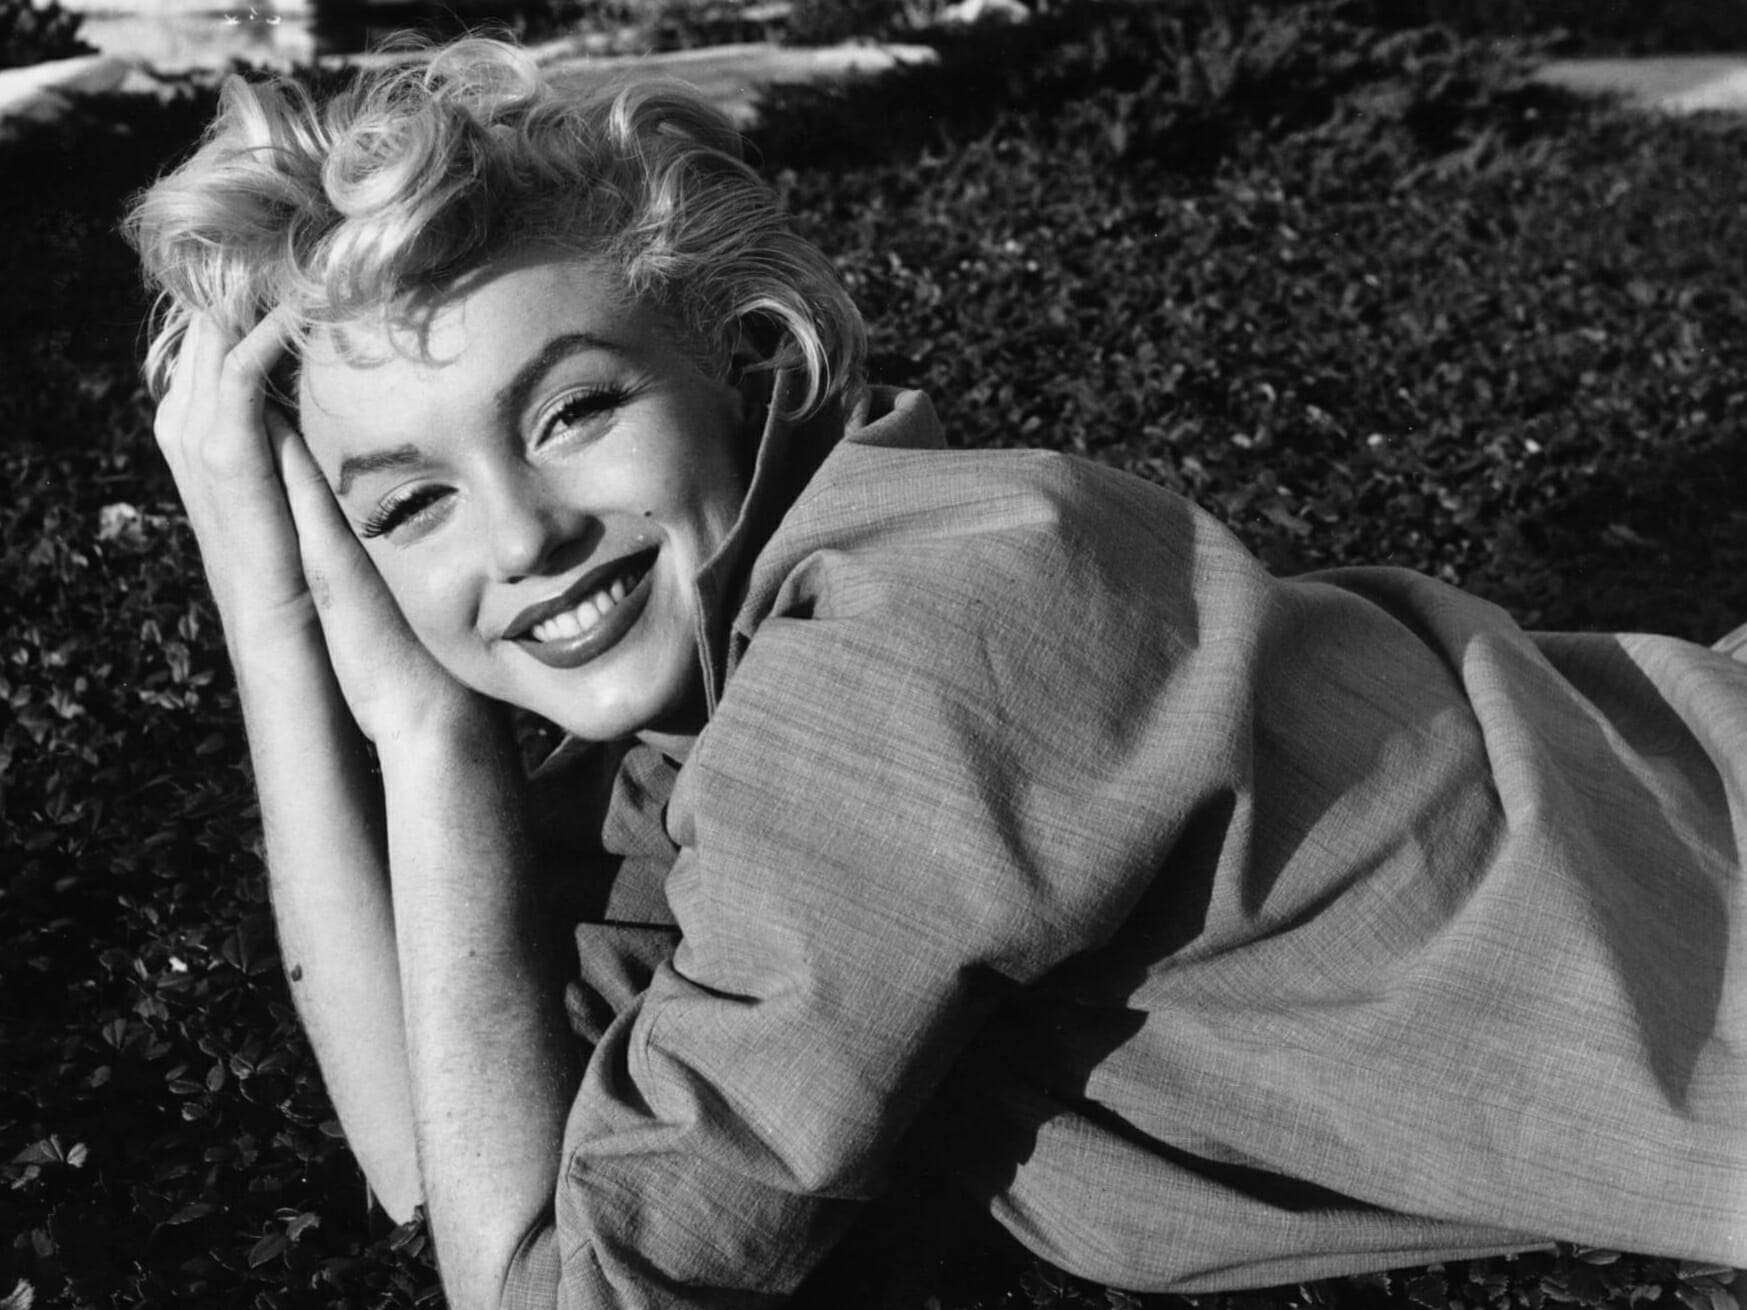 O Mistério de Marilyn Monroe Gravações Inéditas já está disponível na Netflix